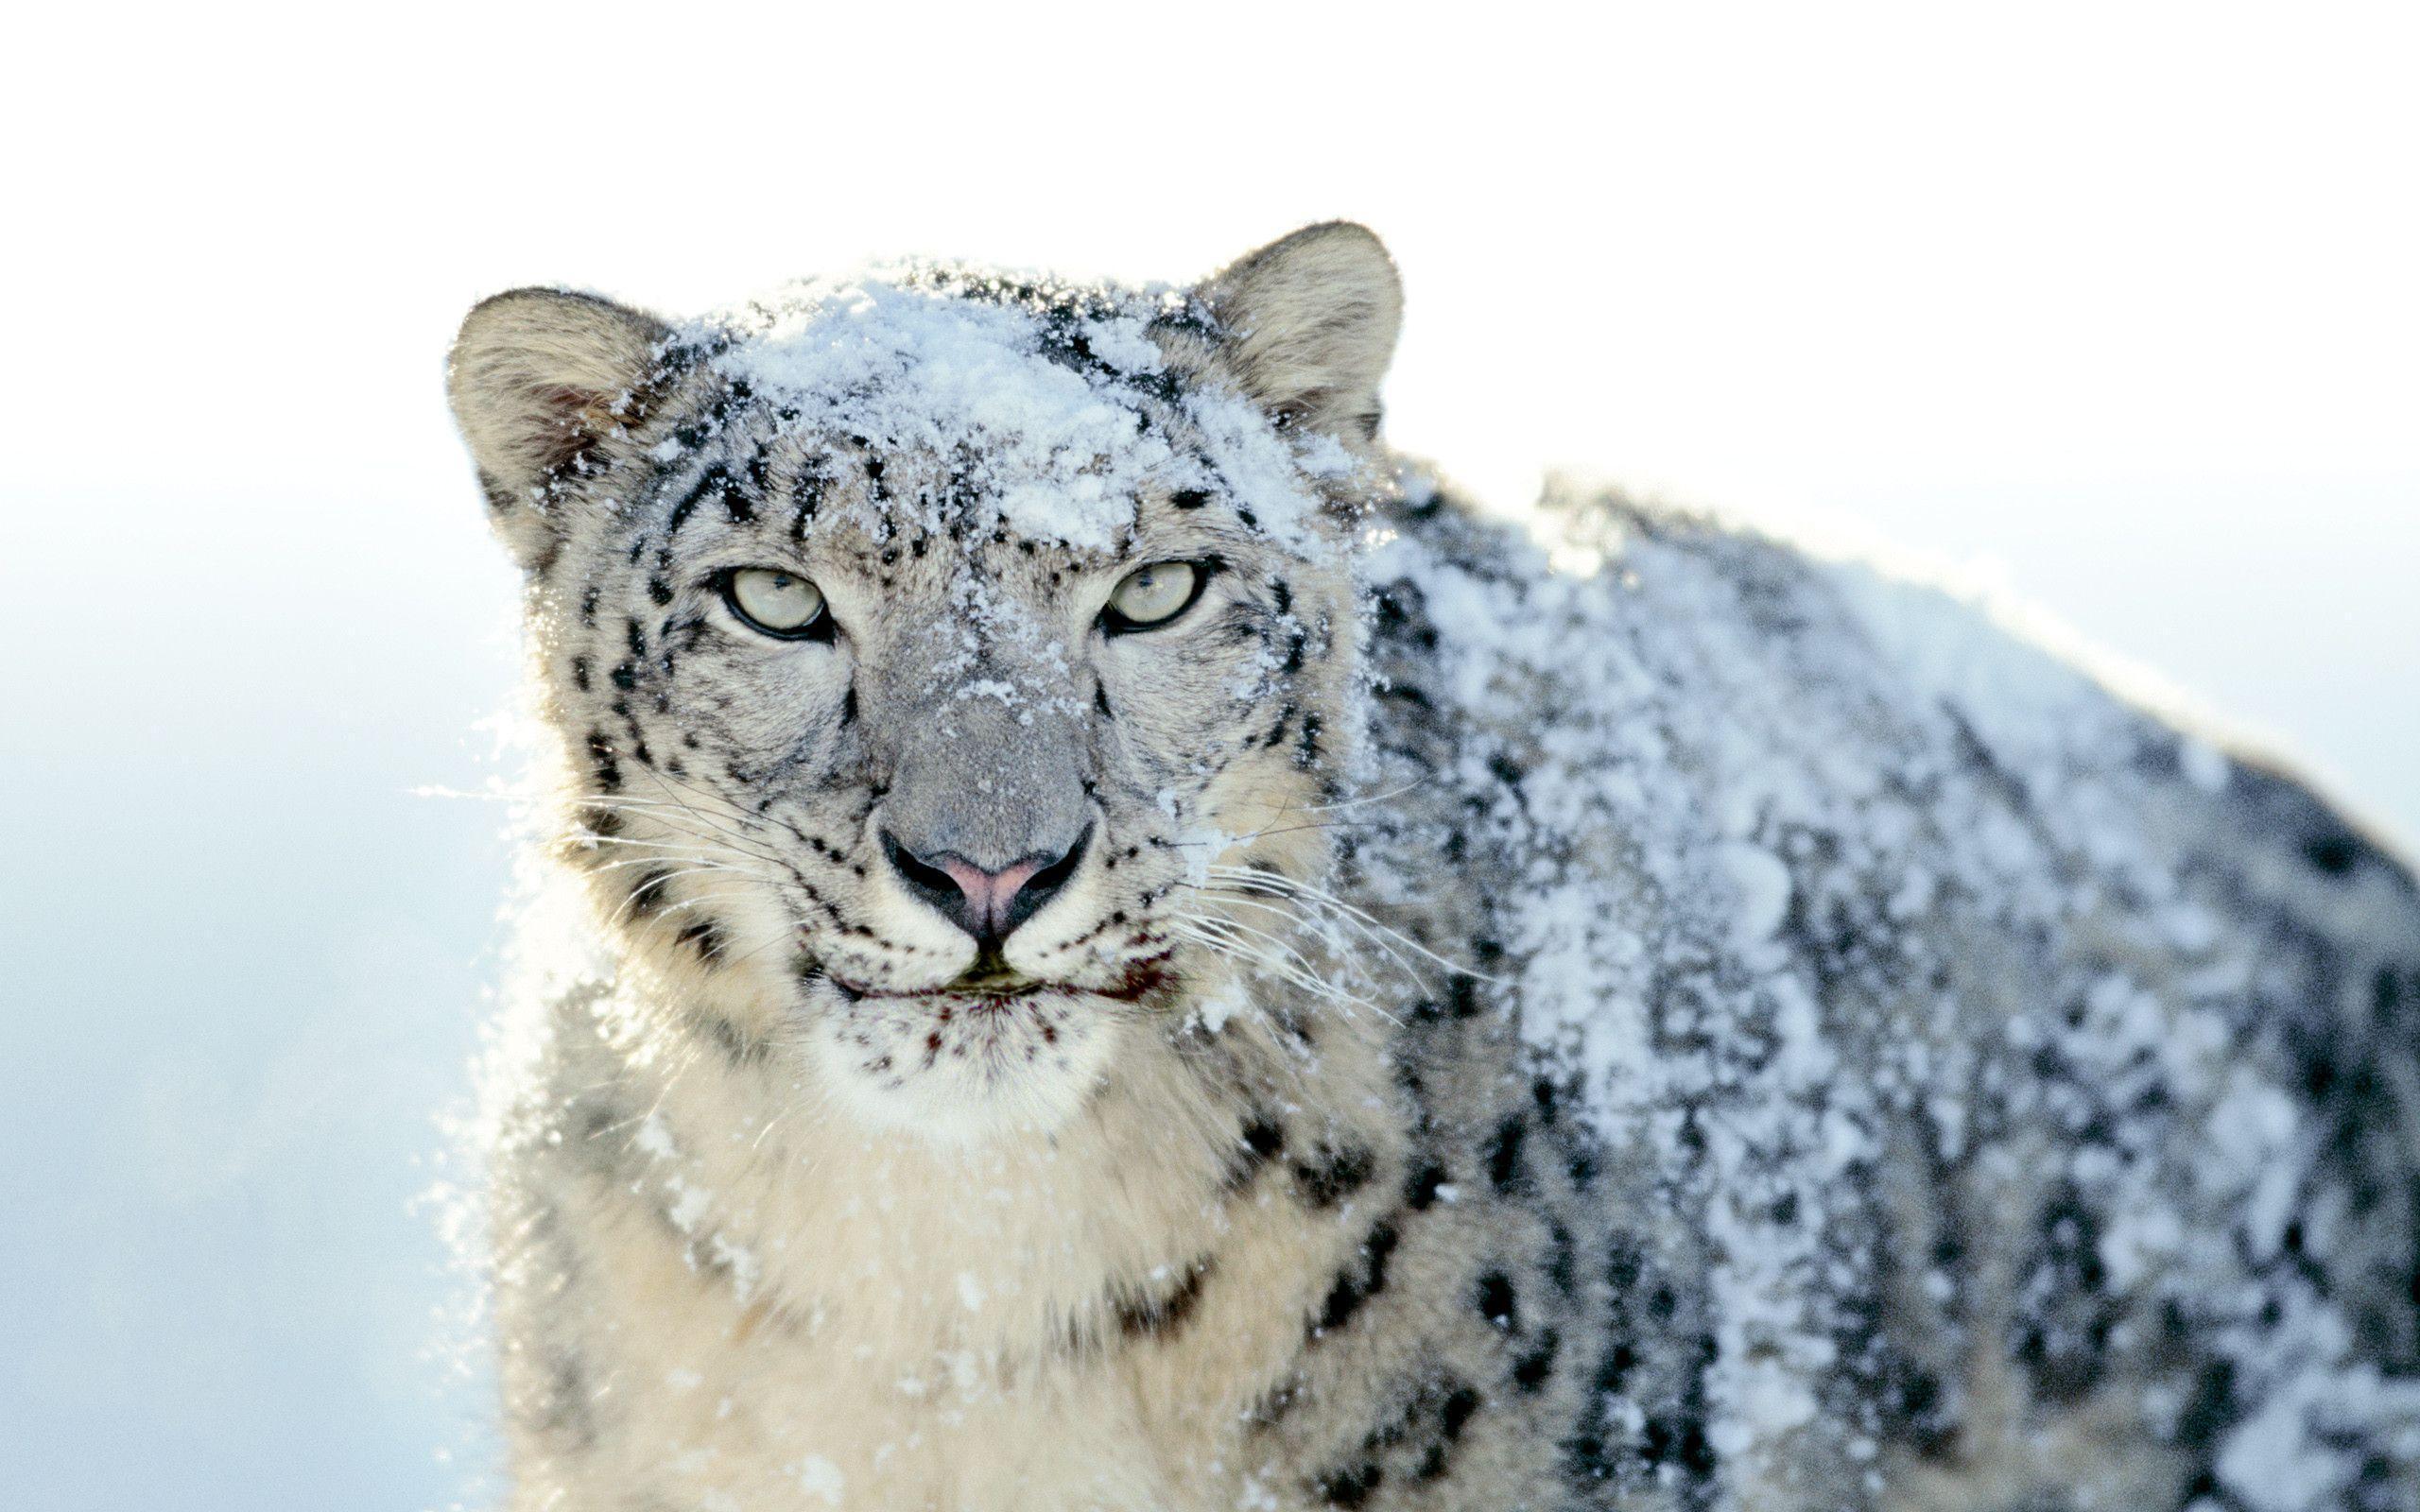 Artistic Snow Leopard Wallpaper Scene, iPhone, Mac